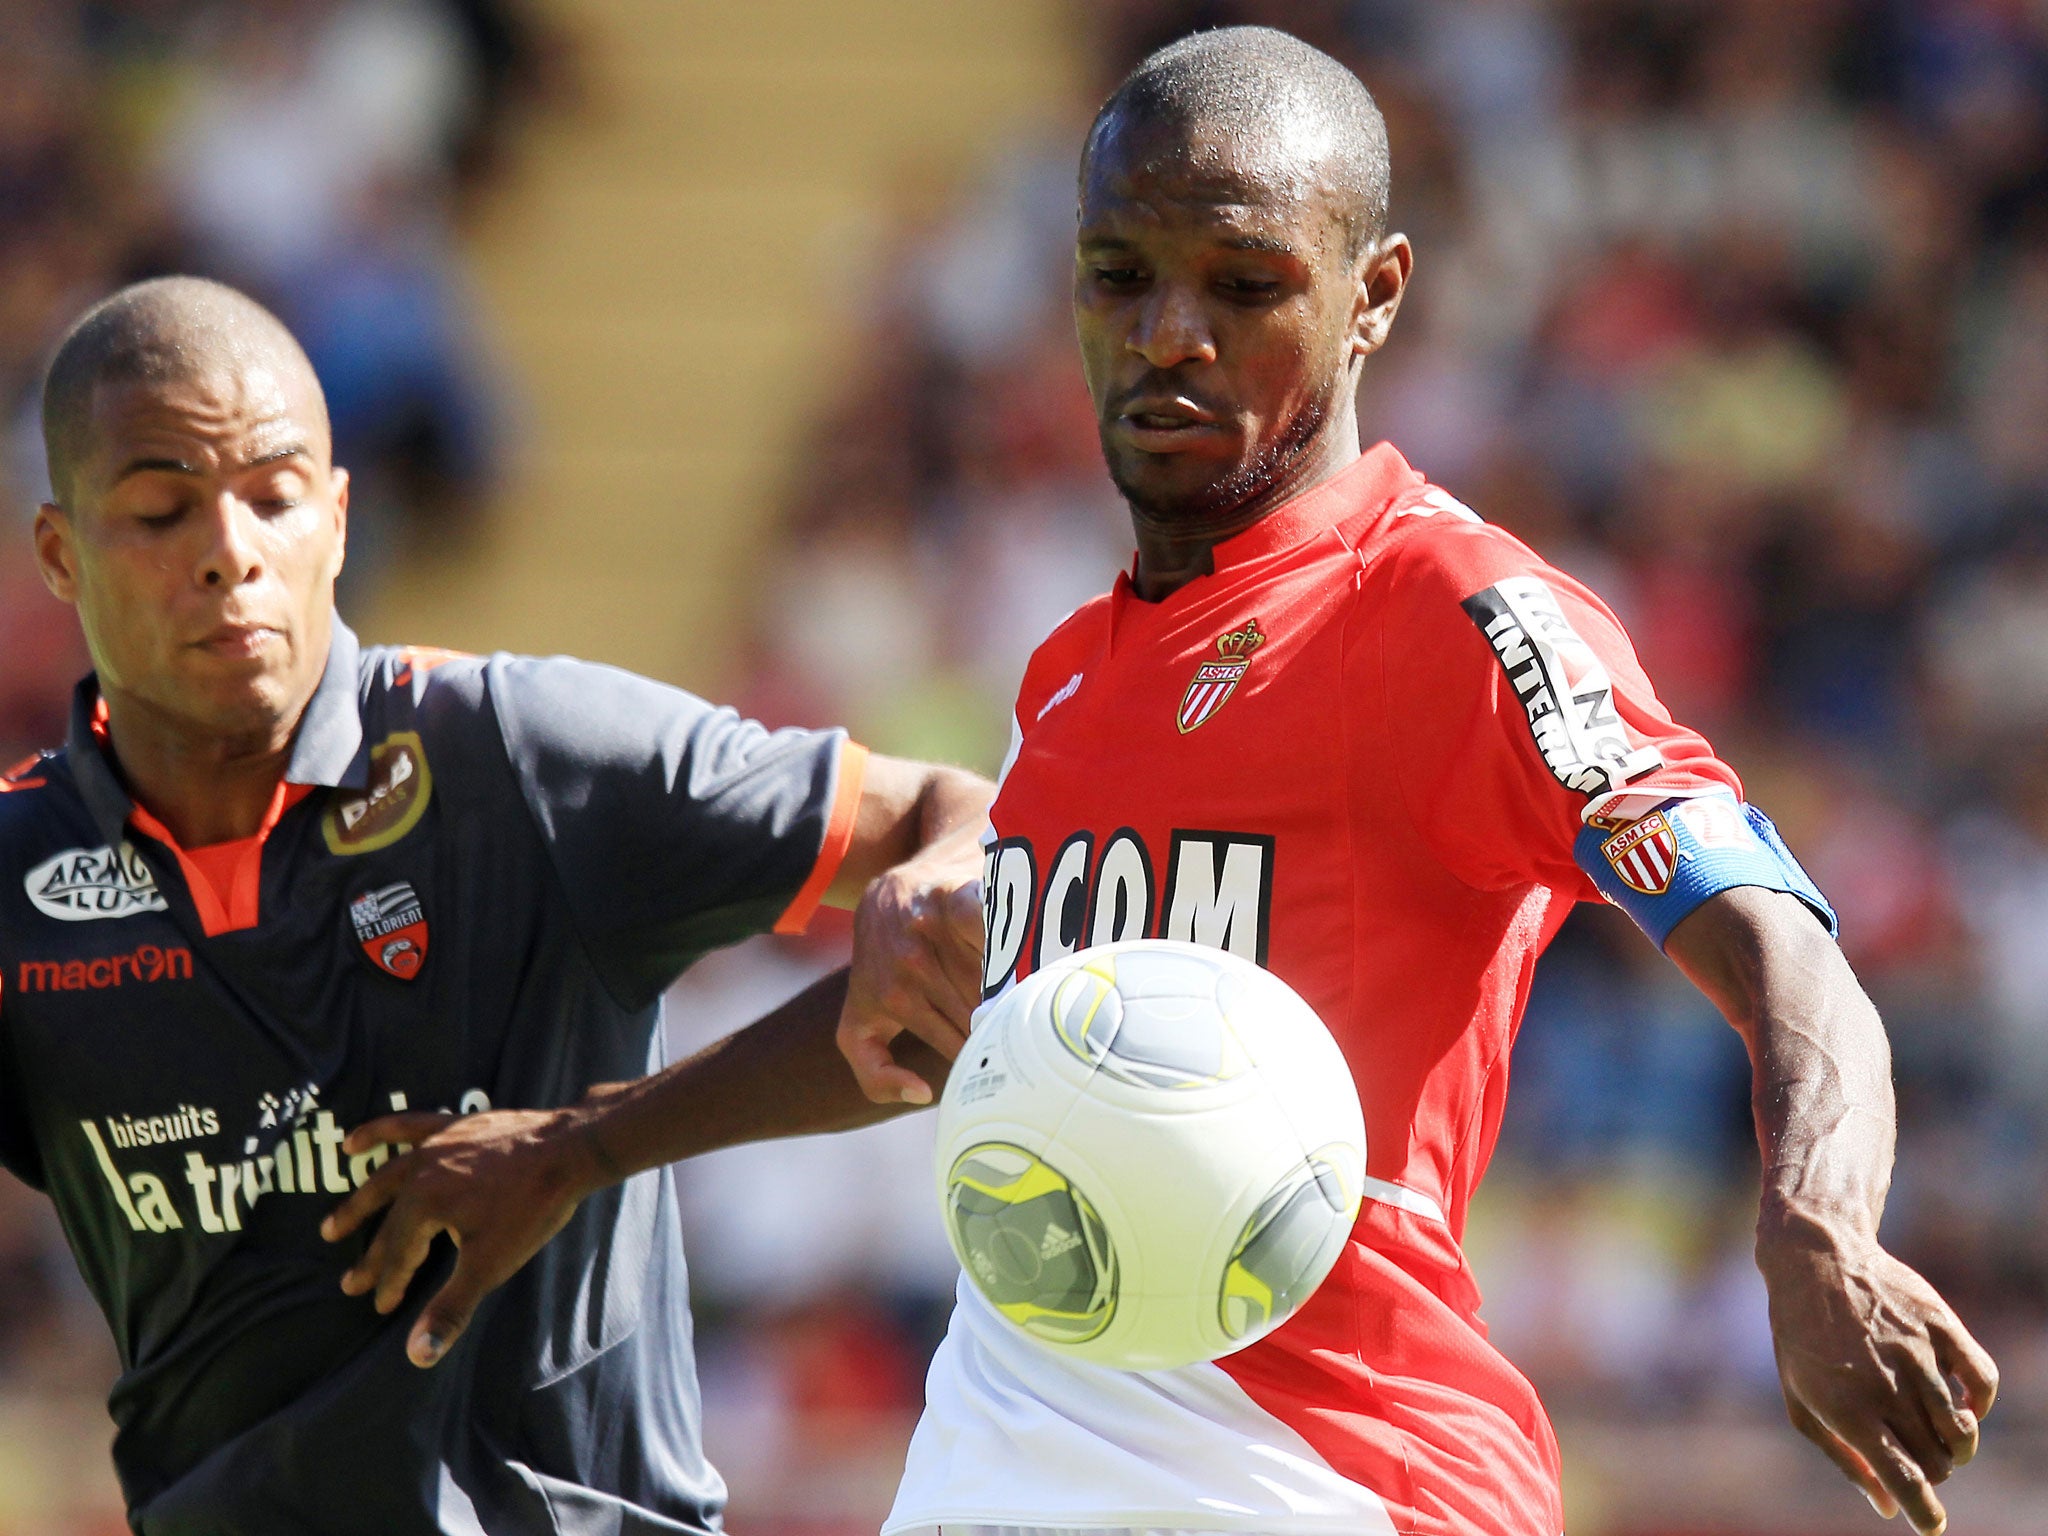 Eric Abidal now captains the AS Monaco side